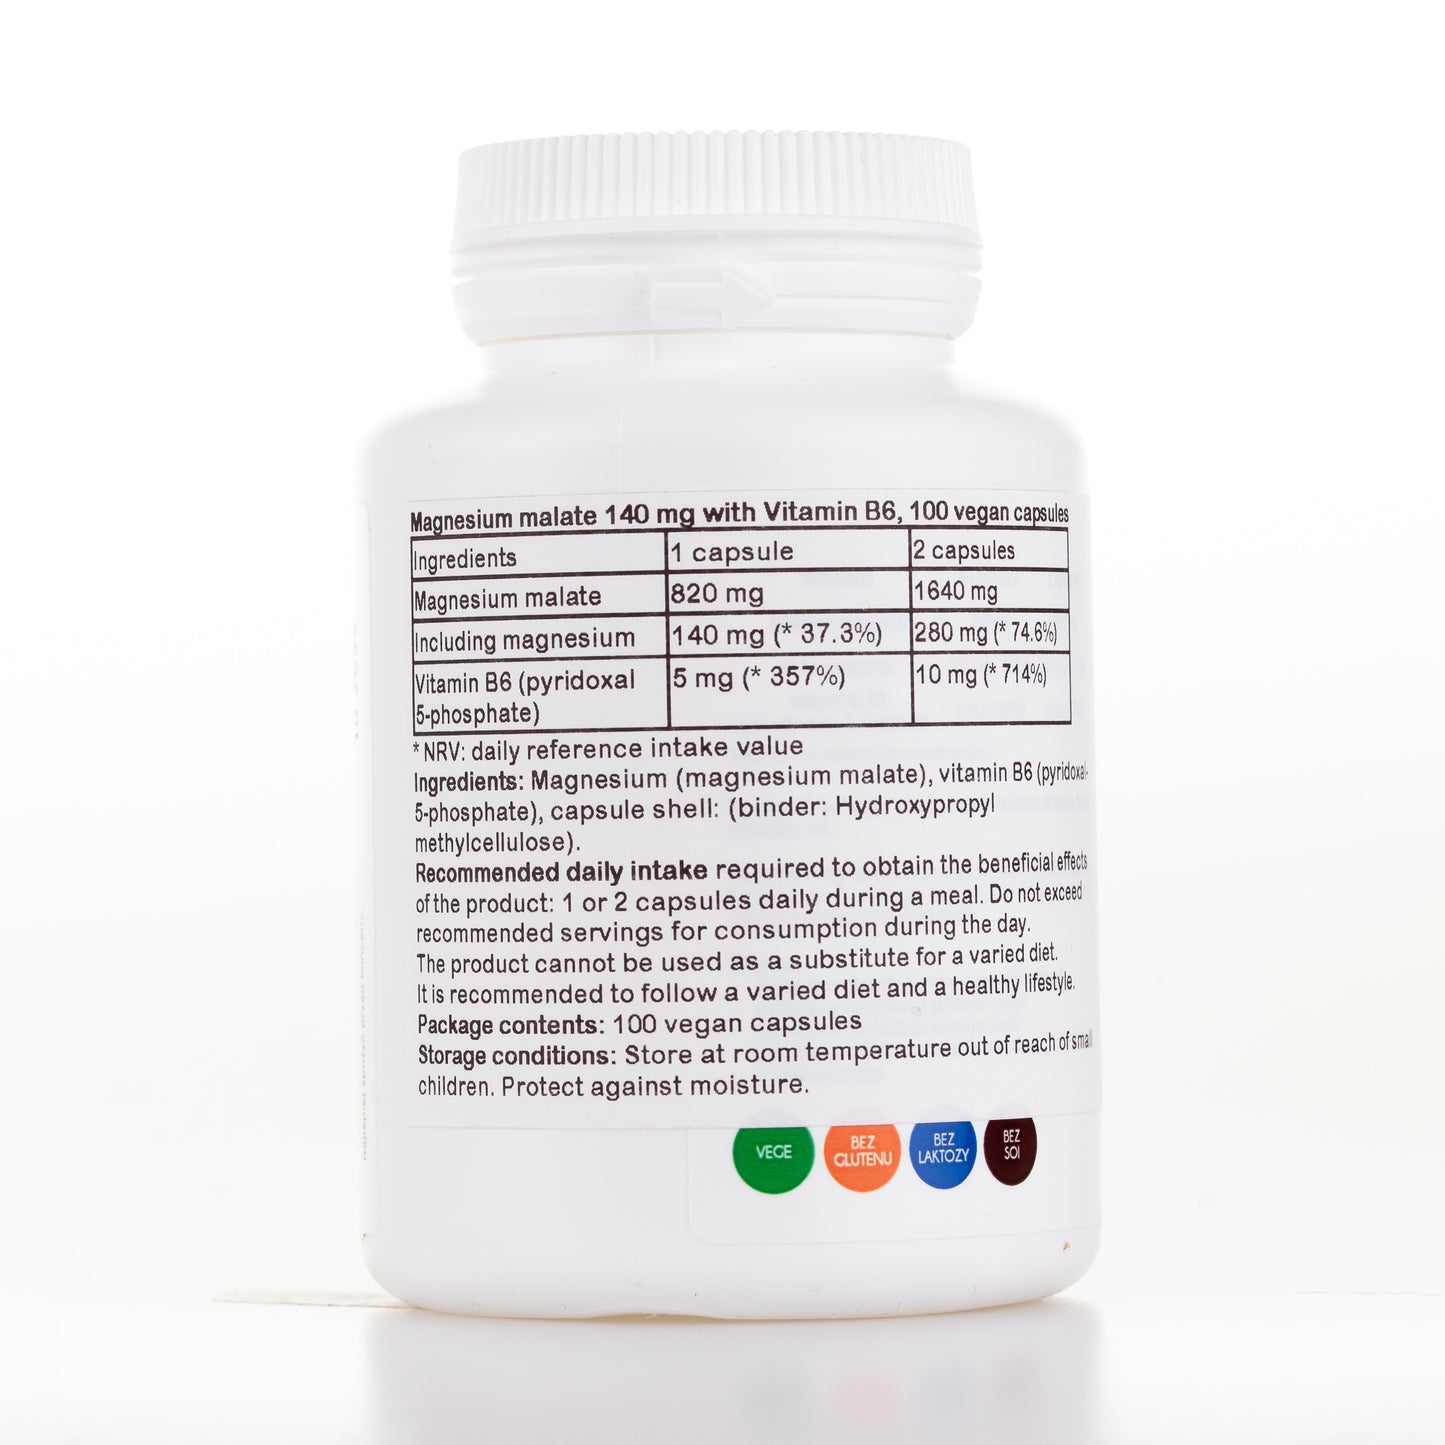 Magnesium malate with Vitamin B6, 100 vegan capsules